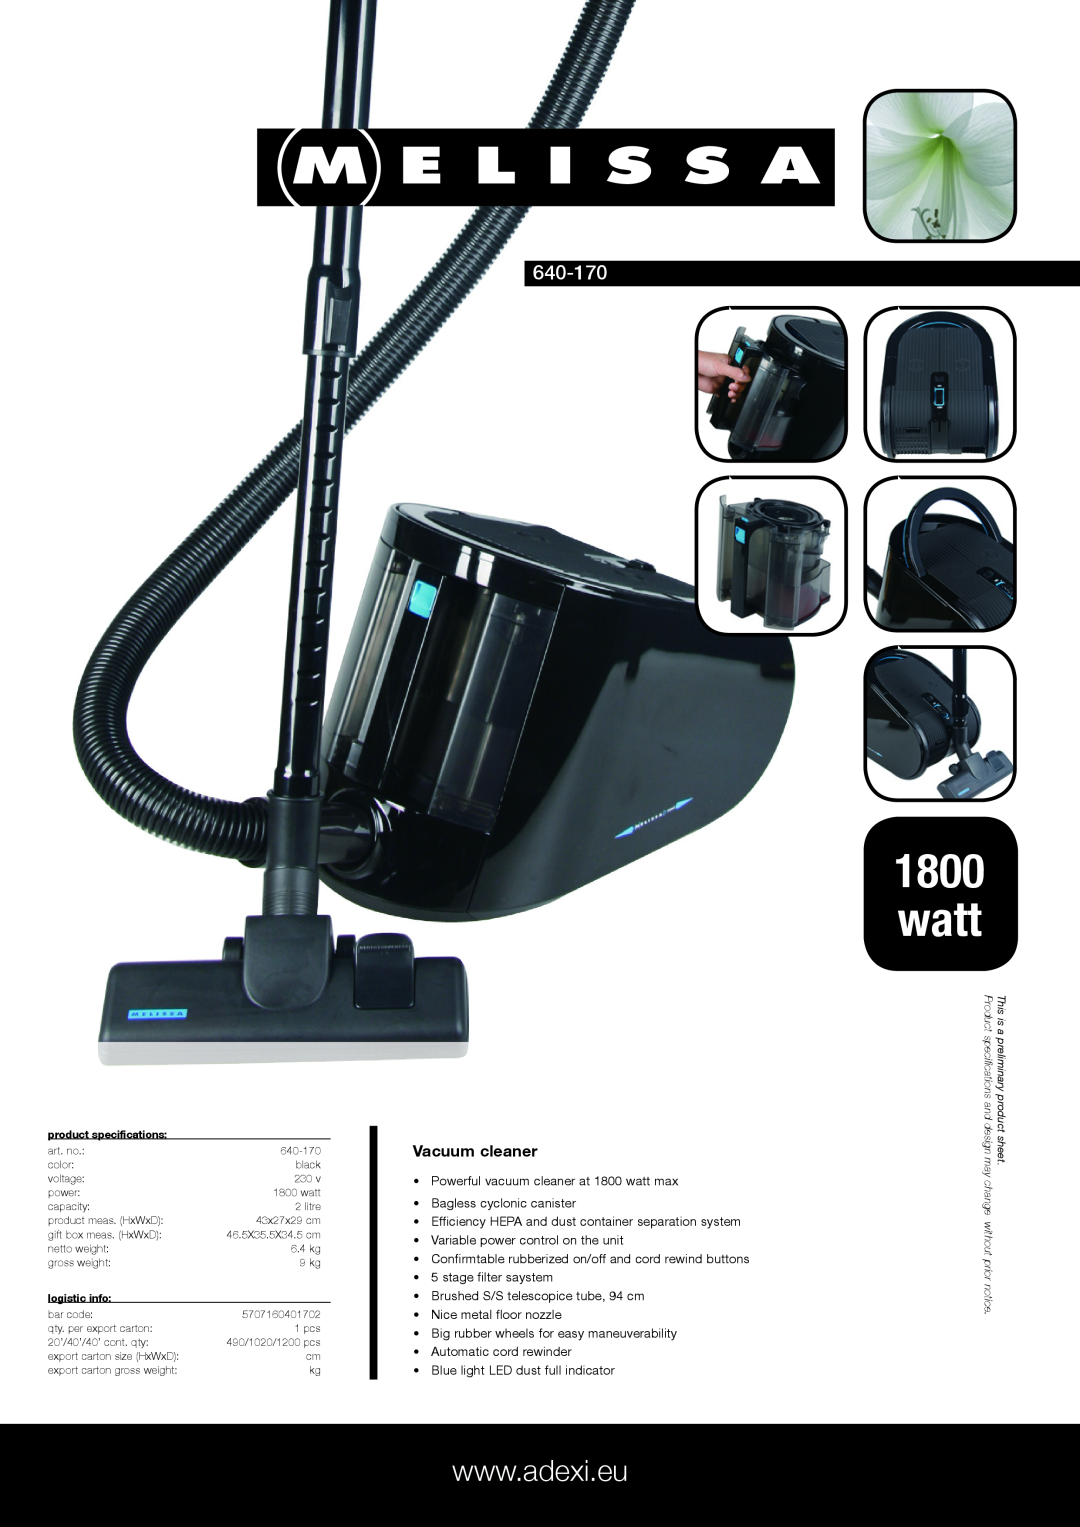 Melissa 640-170 specifications watt, Vacuum cleaner 